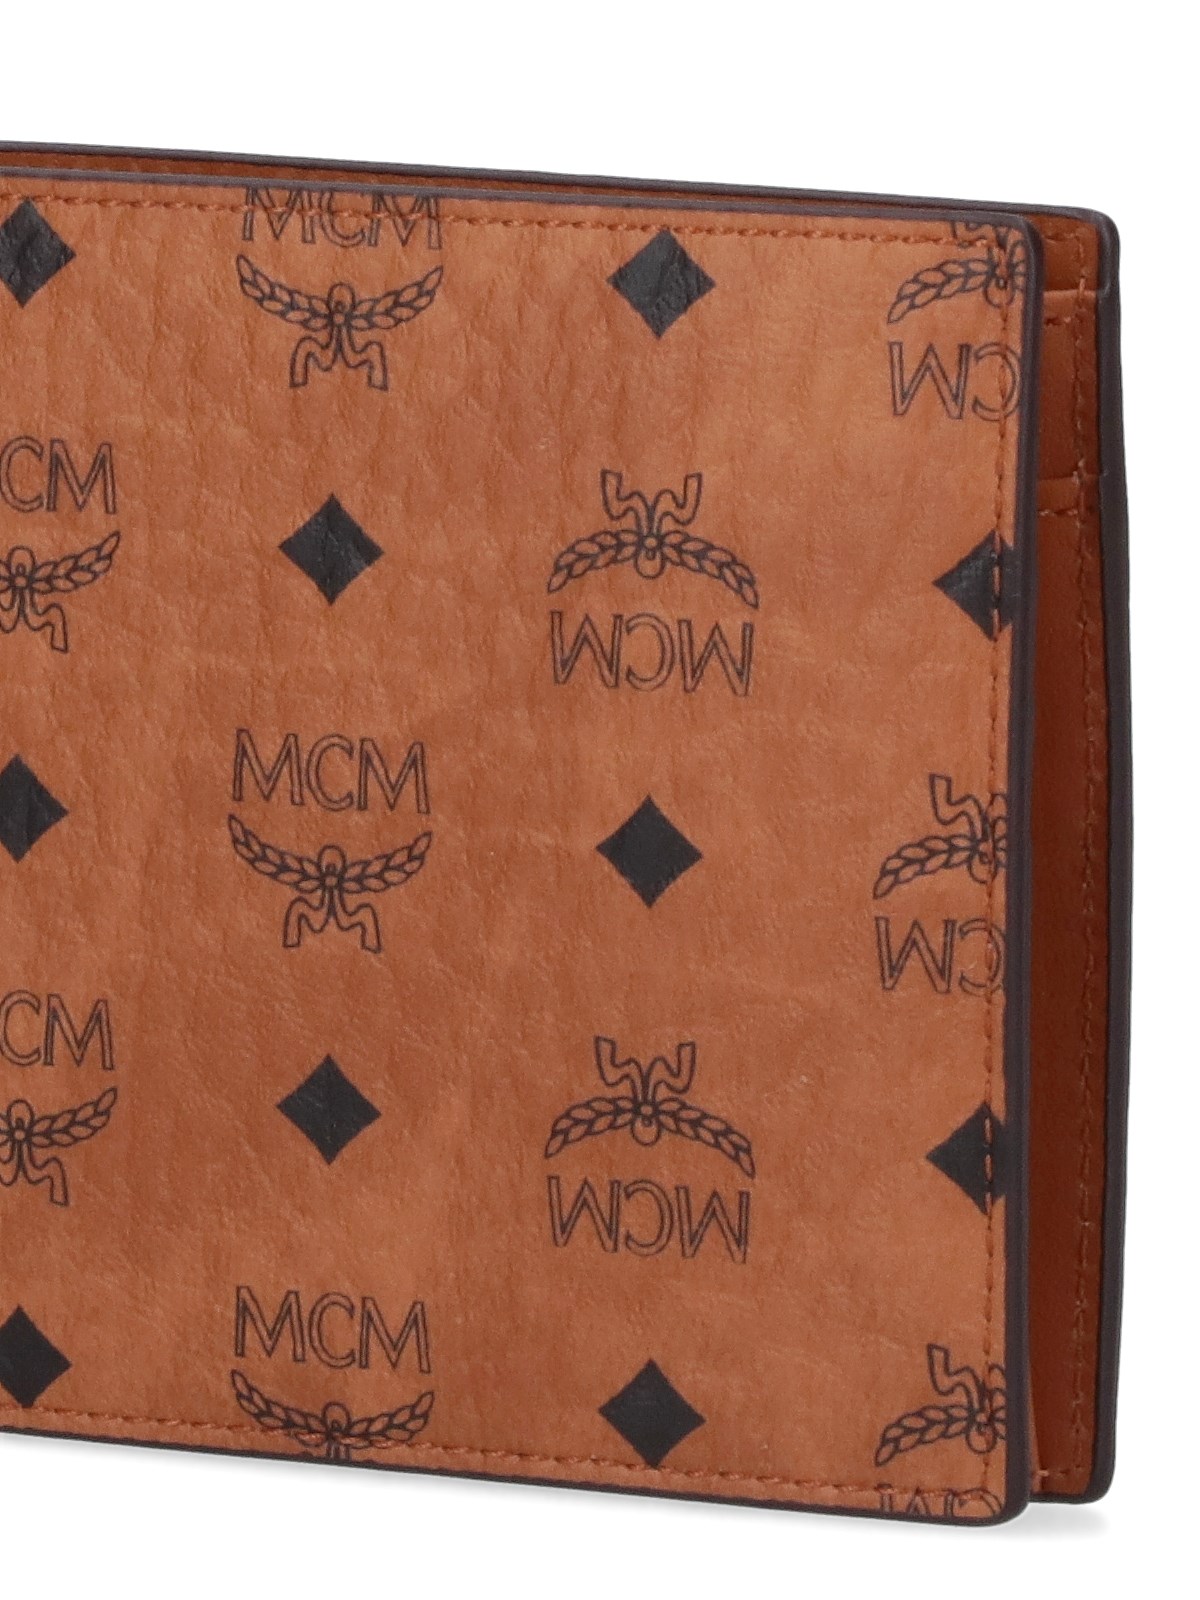 Mcm Bi-fold wallet available on SUGAR - 134729